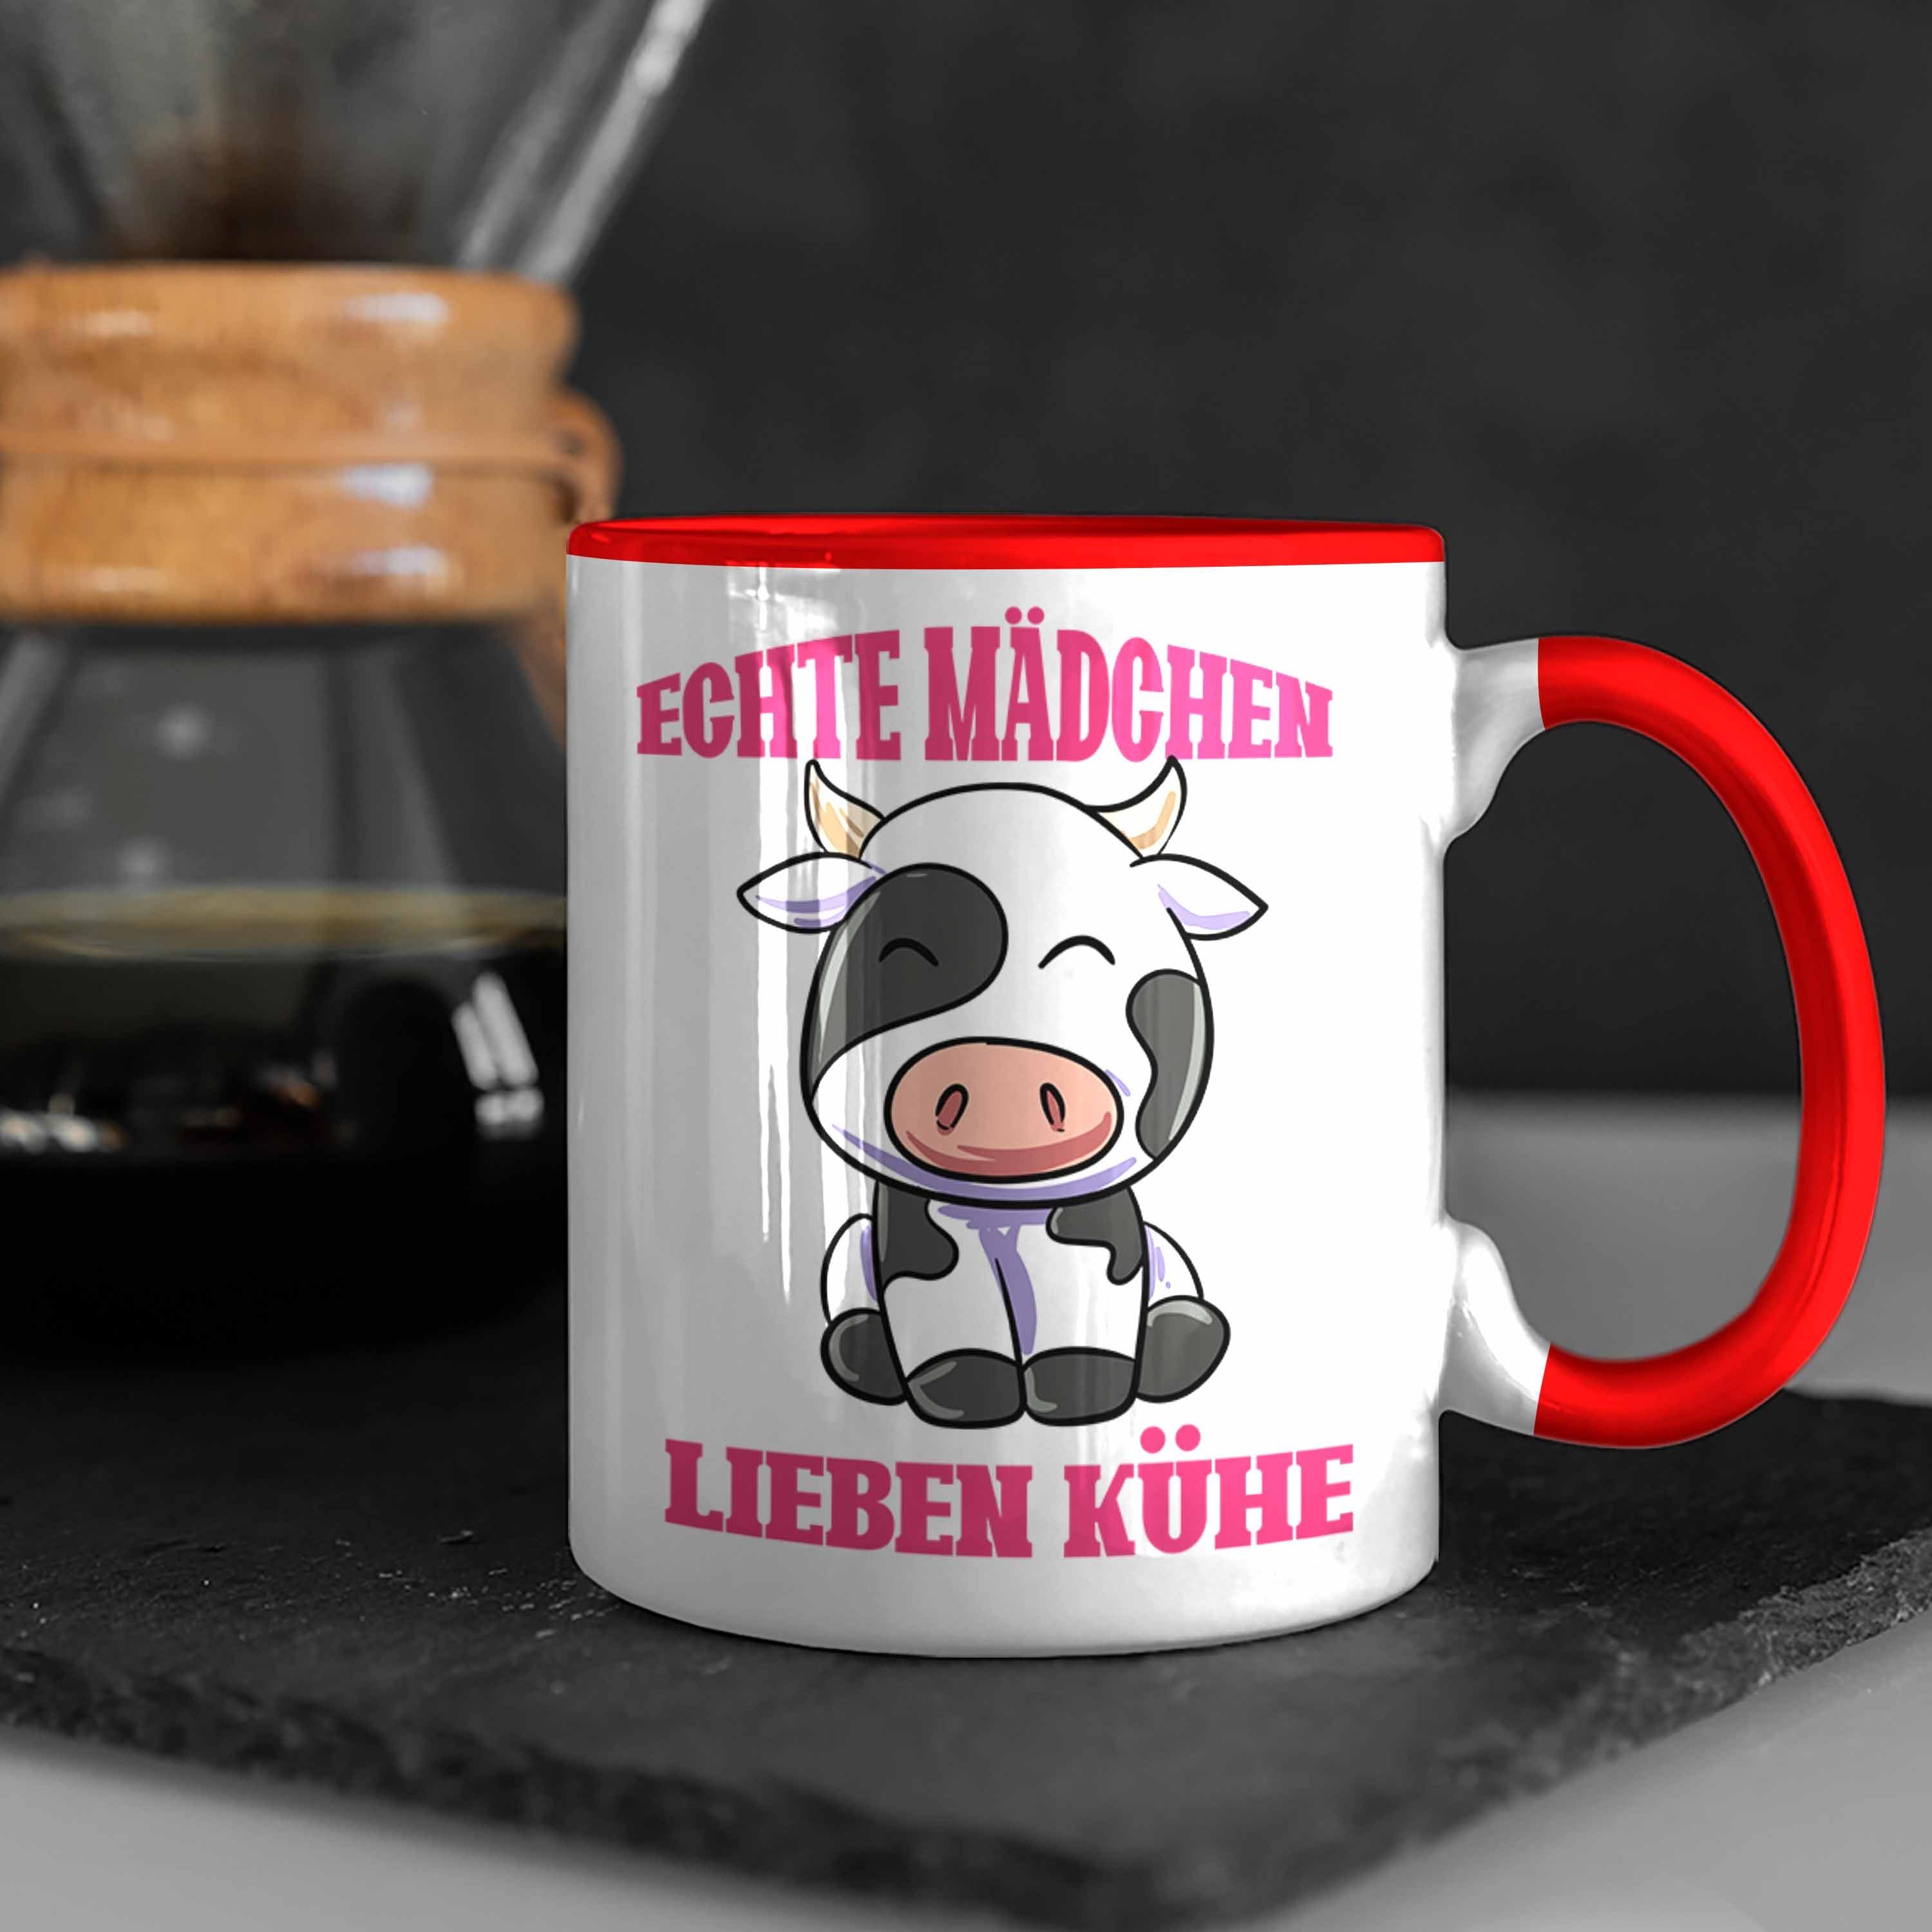 Landwirtin Mädchen Echte Trendation Geschenk Tasse Gesch Bäuerin Tasse Lieben Rot Kühe Kuh